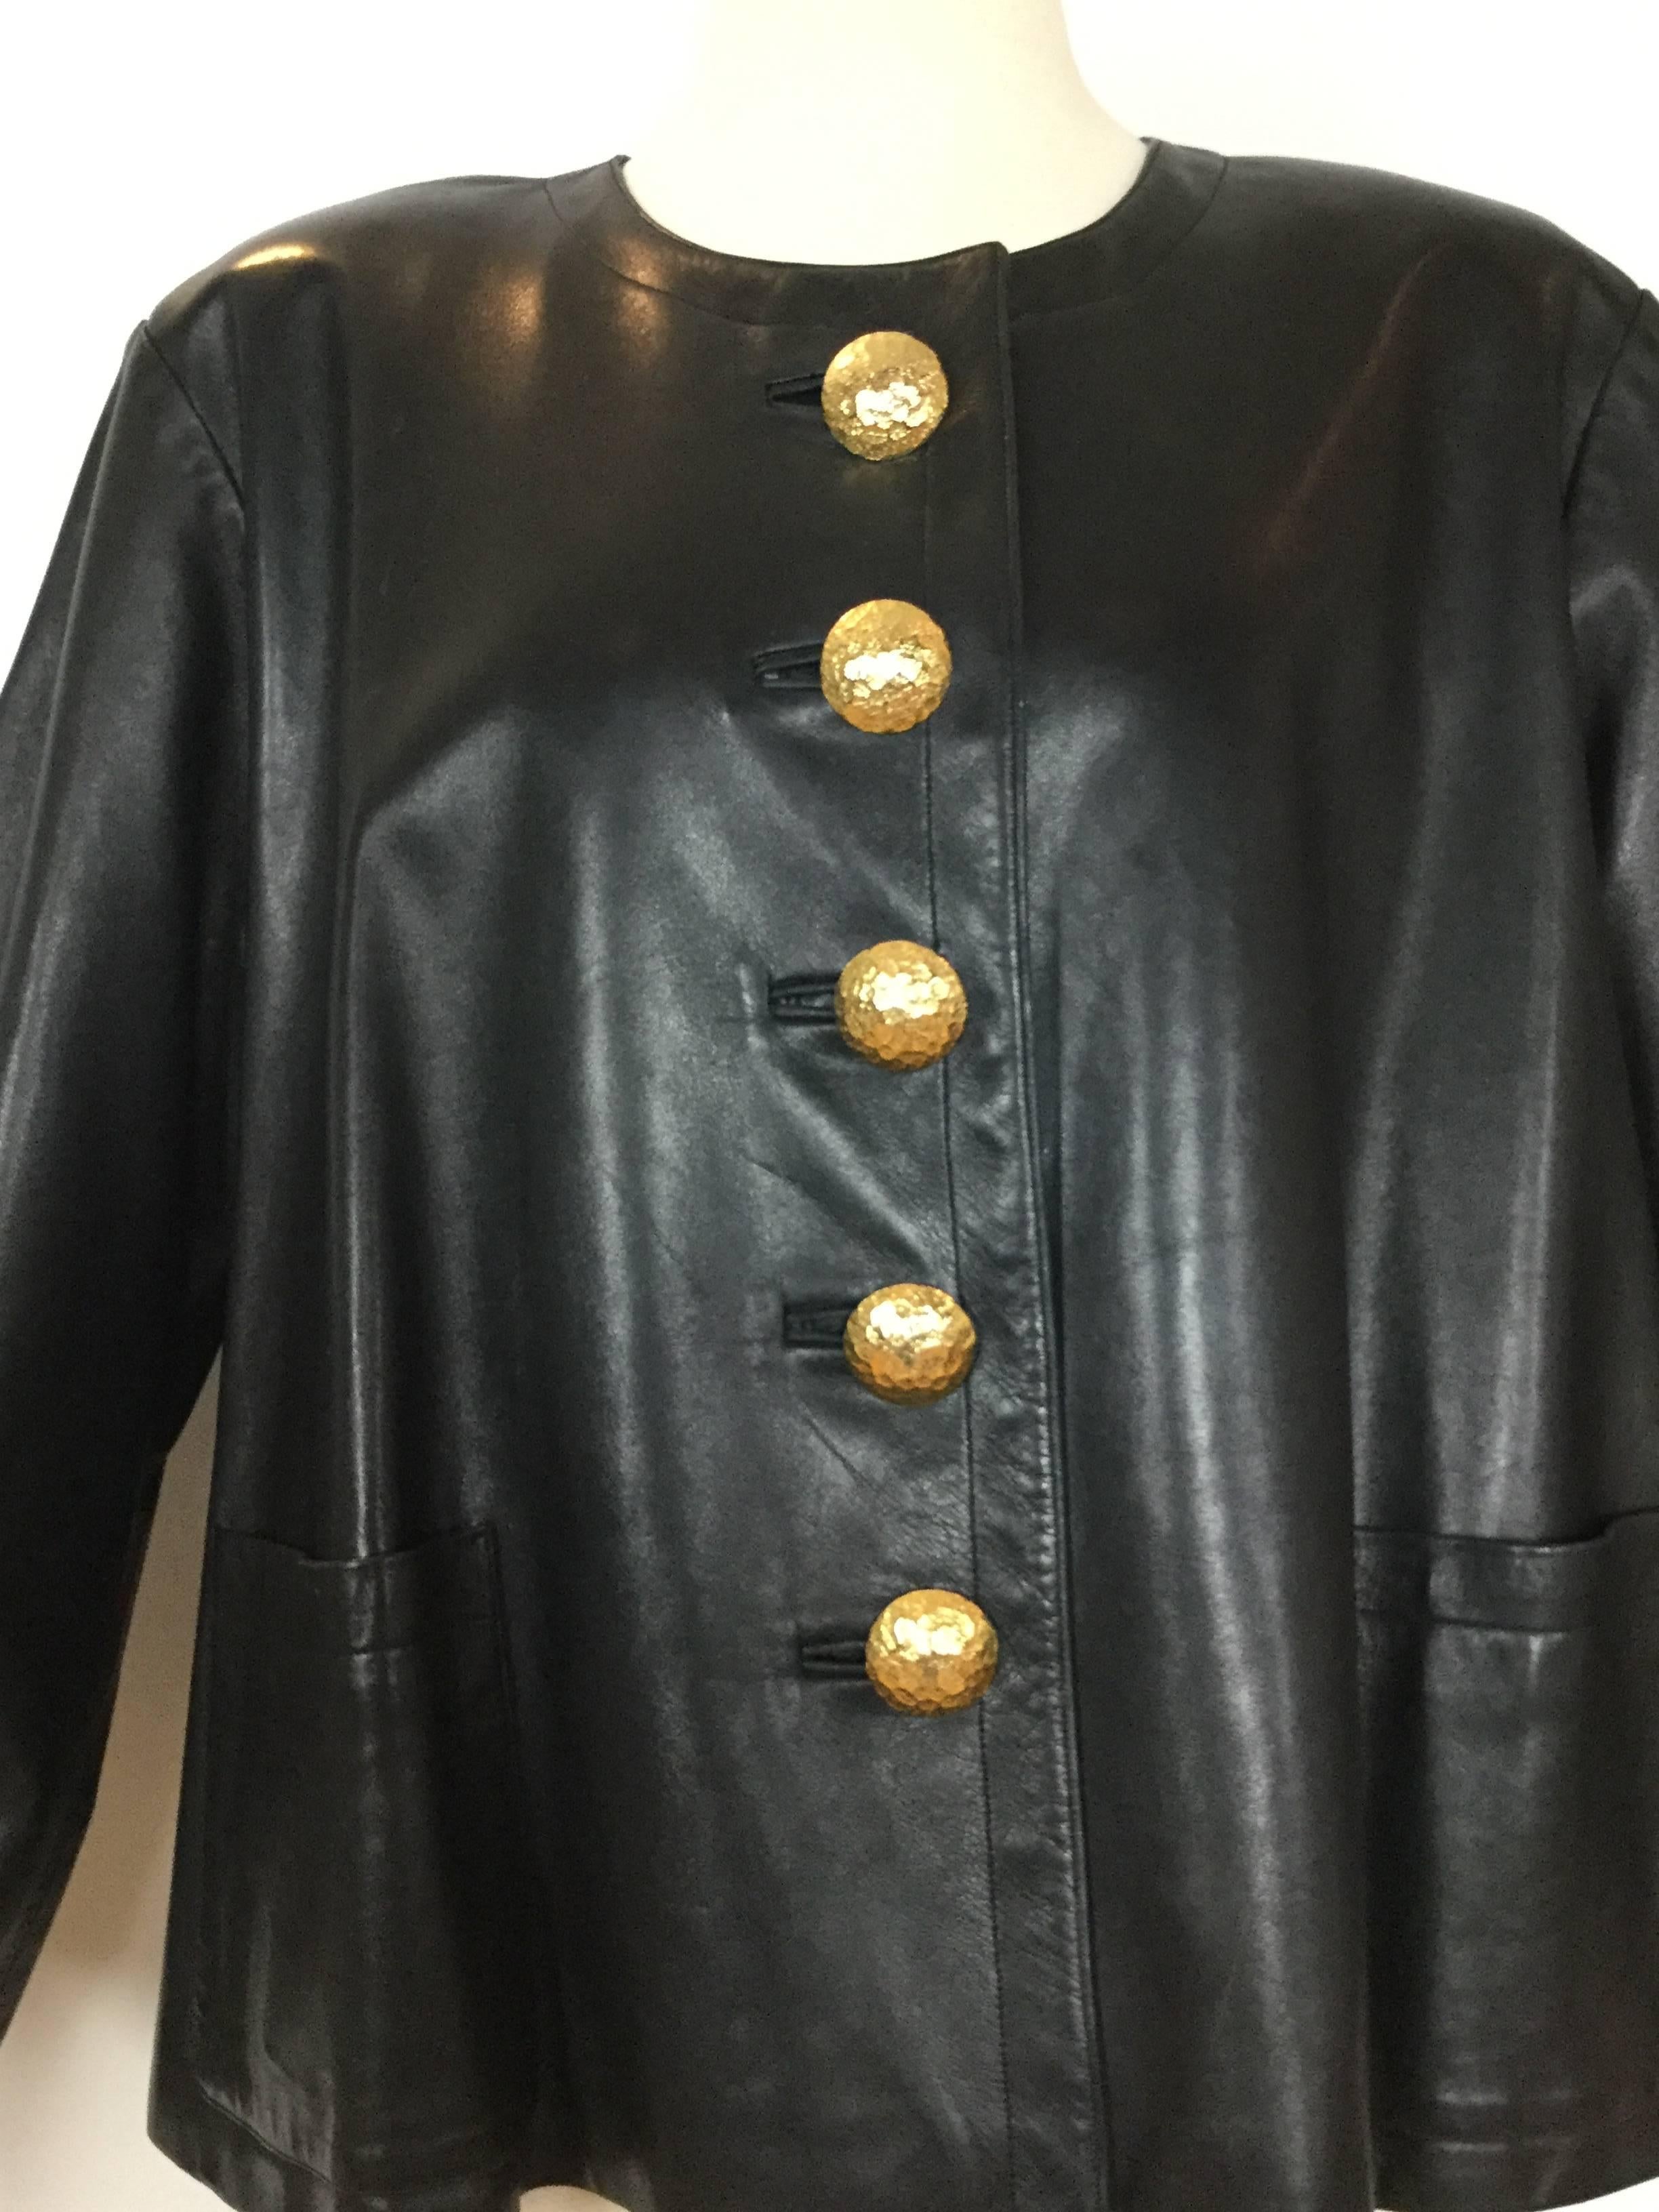 Women's Yves Saint Laurent Black Leather Swing Jacket. 1980's.